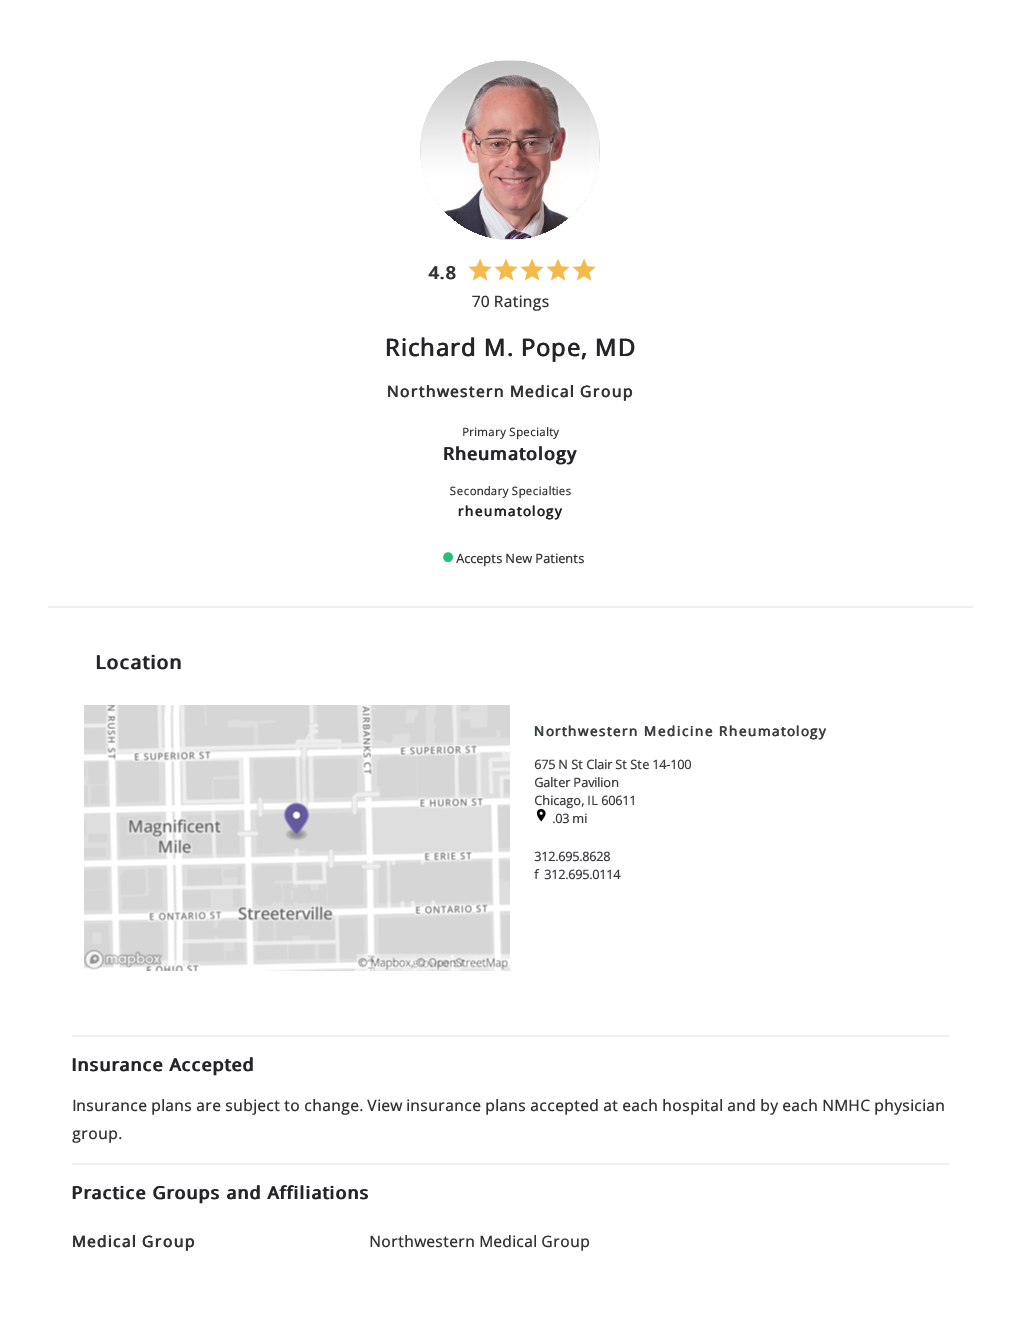 Richard M. Pope, MD Northwestern Medical Group